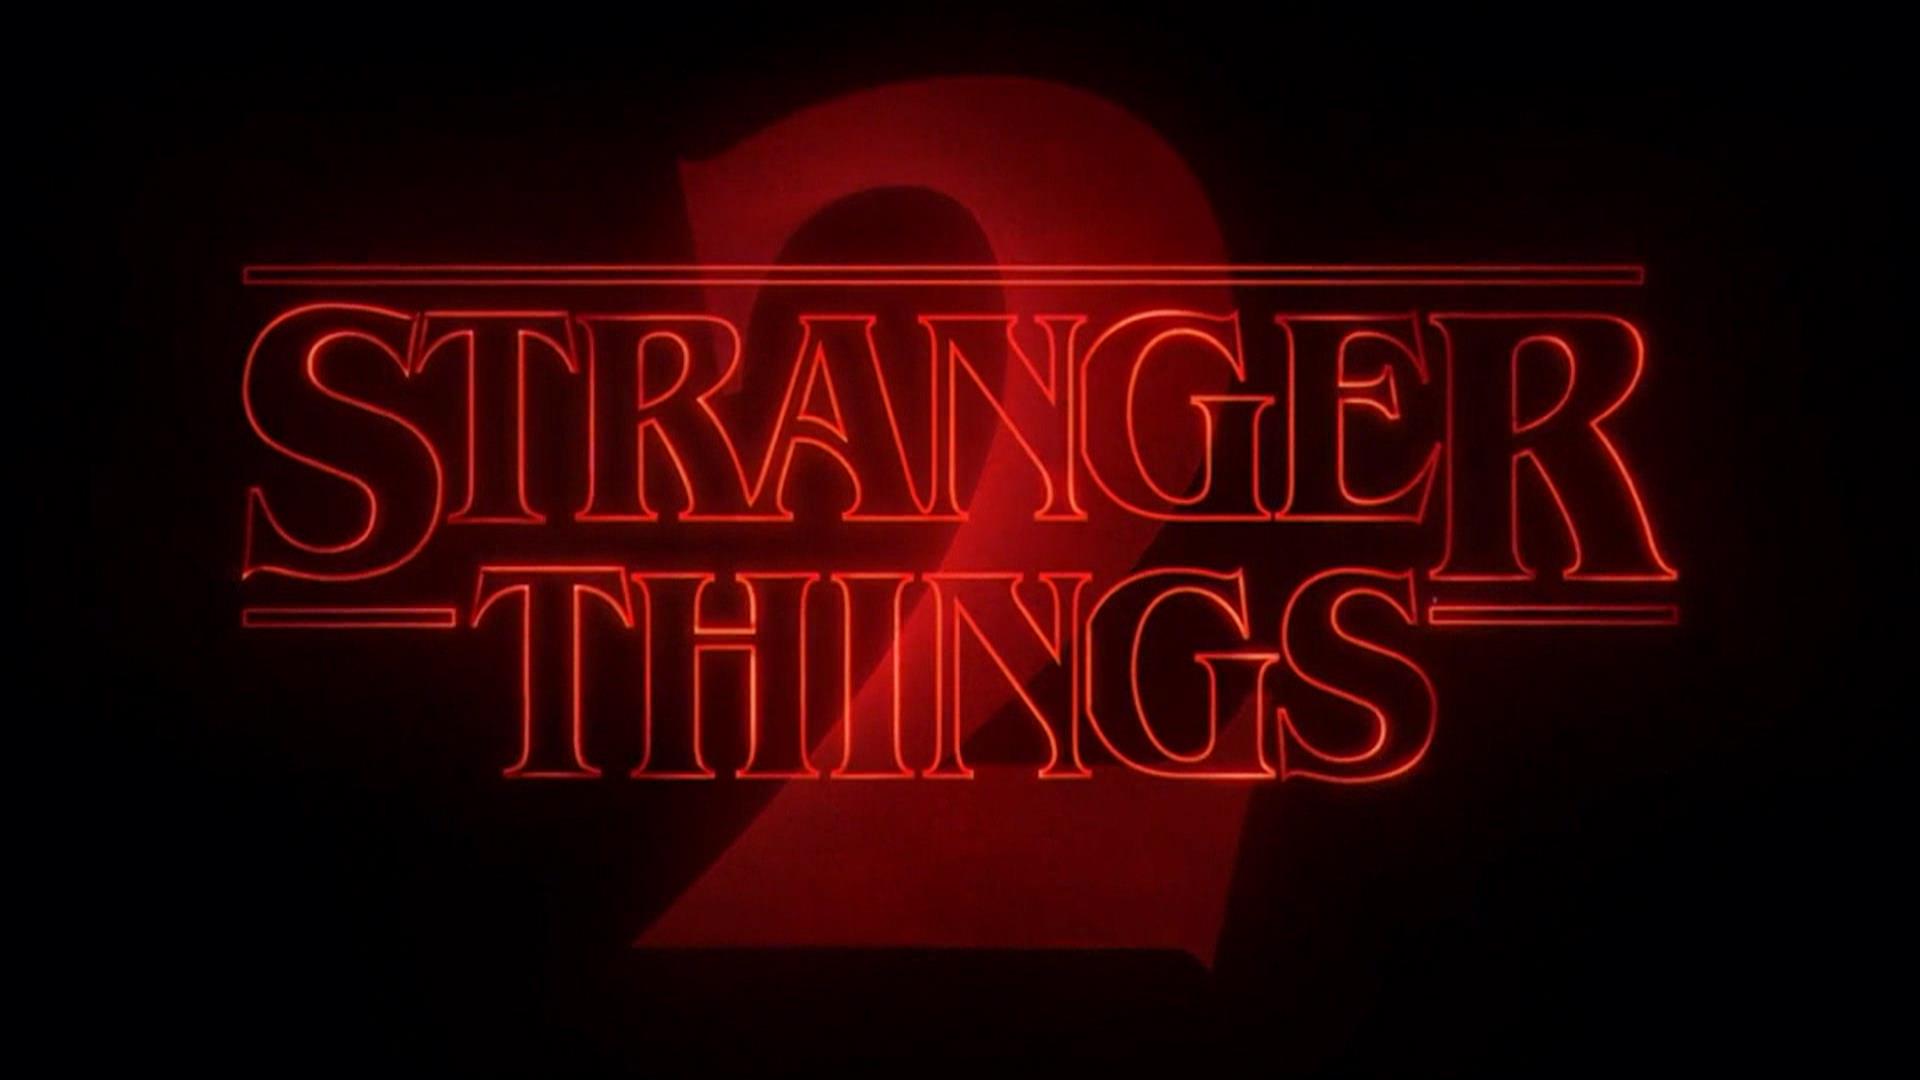 'Stranger Things' season 2 premiere date revealed in intense new trailer